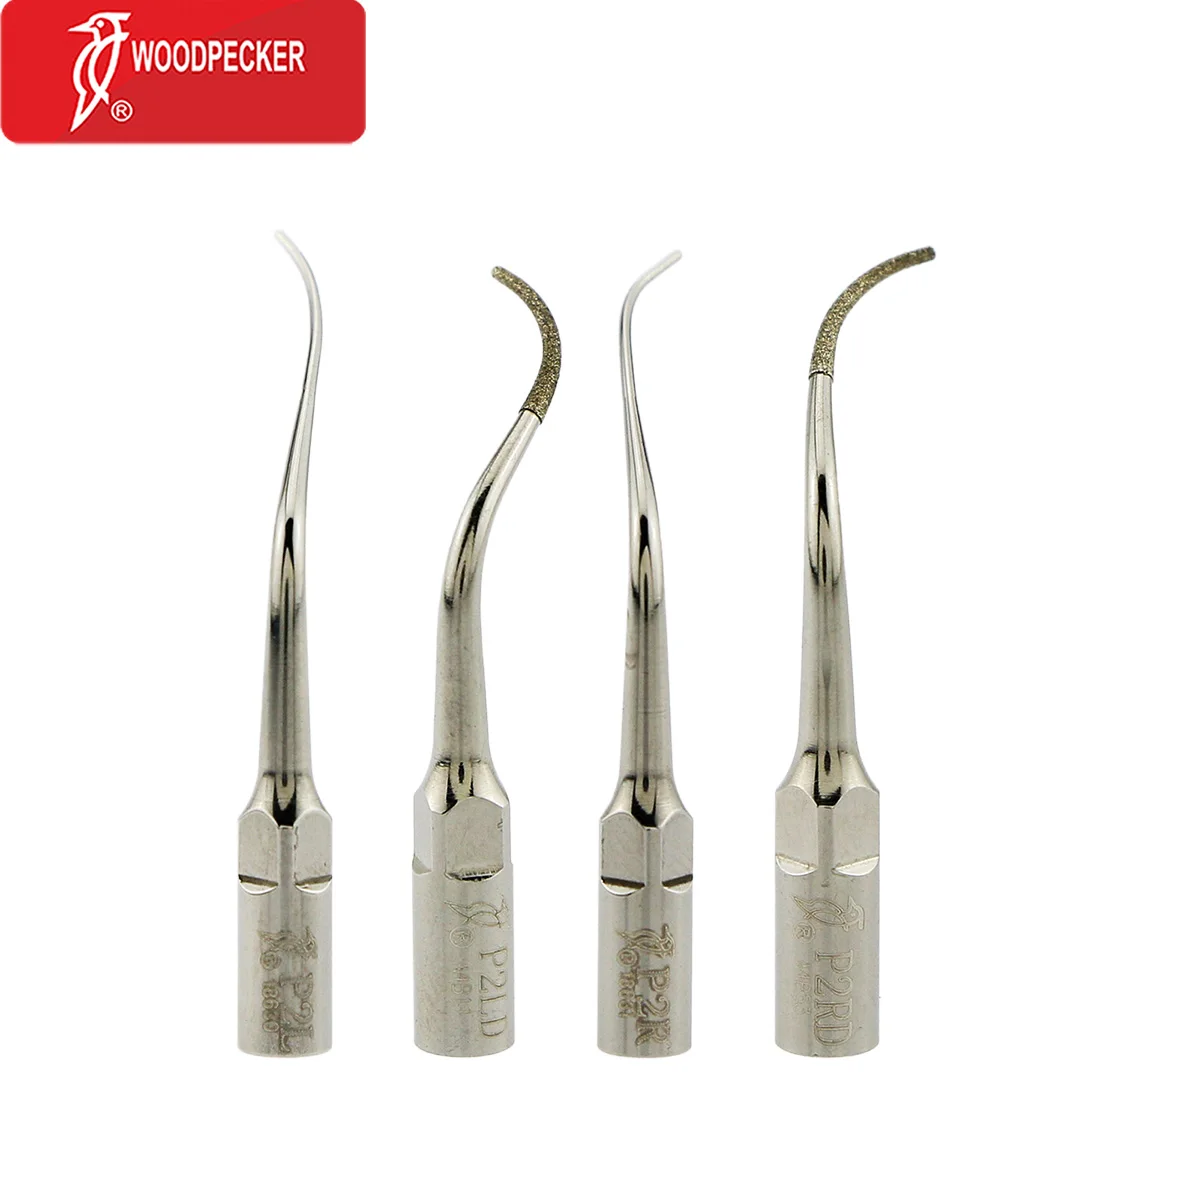 5Pcs Original Woodpecker Dental Ultrasonic Scaler Scaling Diamond-Coated Tips P2L, P2LD, P2R, P2RD, Fit EMS UDS Scaler